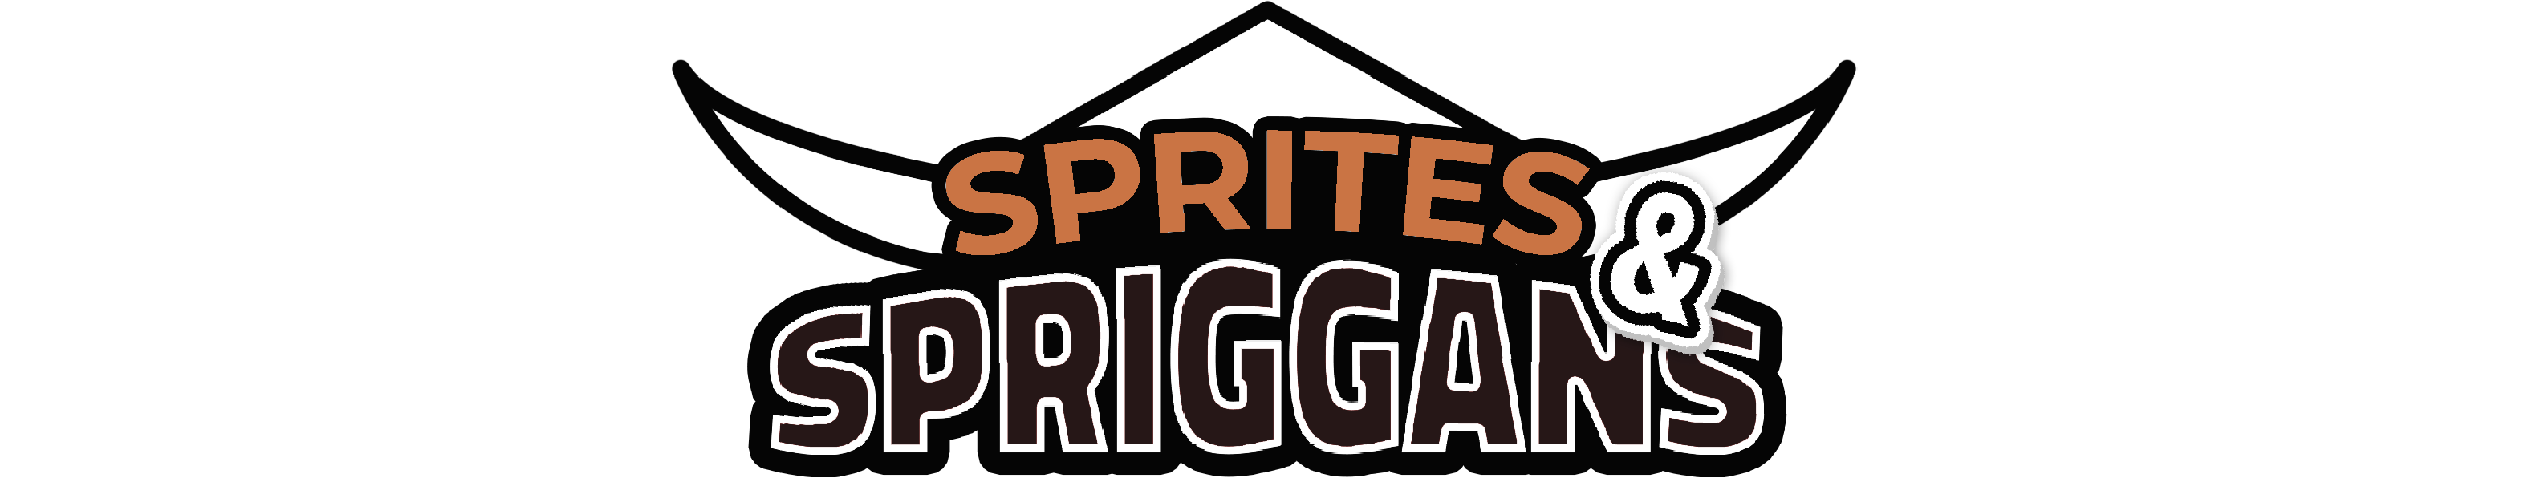 Sprites and Spriggans